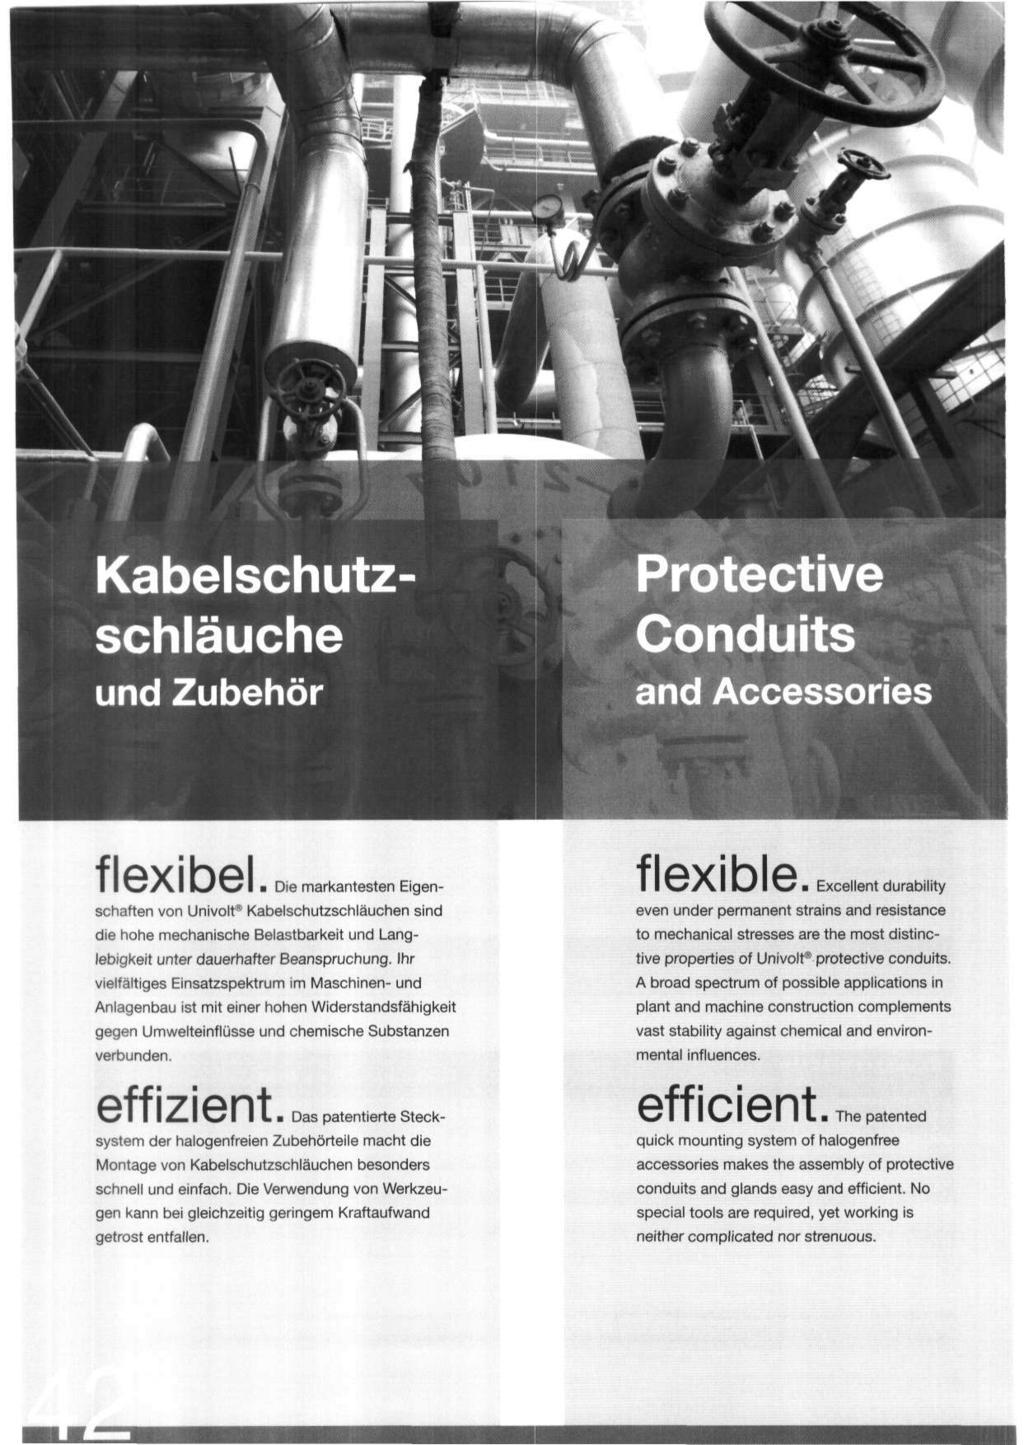 ': ' "Ju ffj Kabelschutzschlauche und Zubehor i; Hi ~55^H К вик\ чь ЧВ ^V^^k ^И protective and Accessories flexibel.